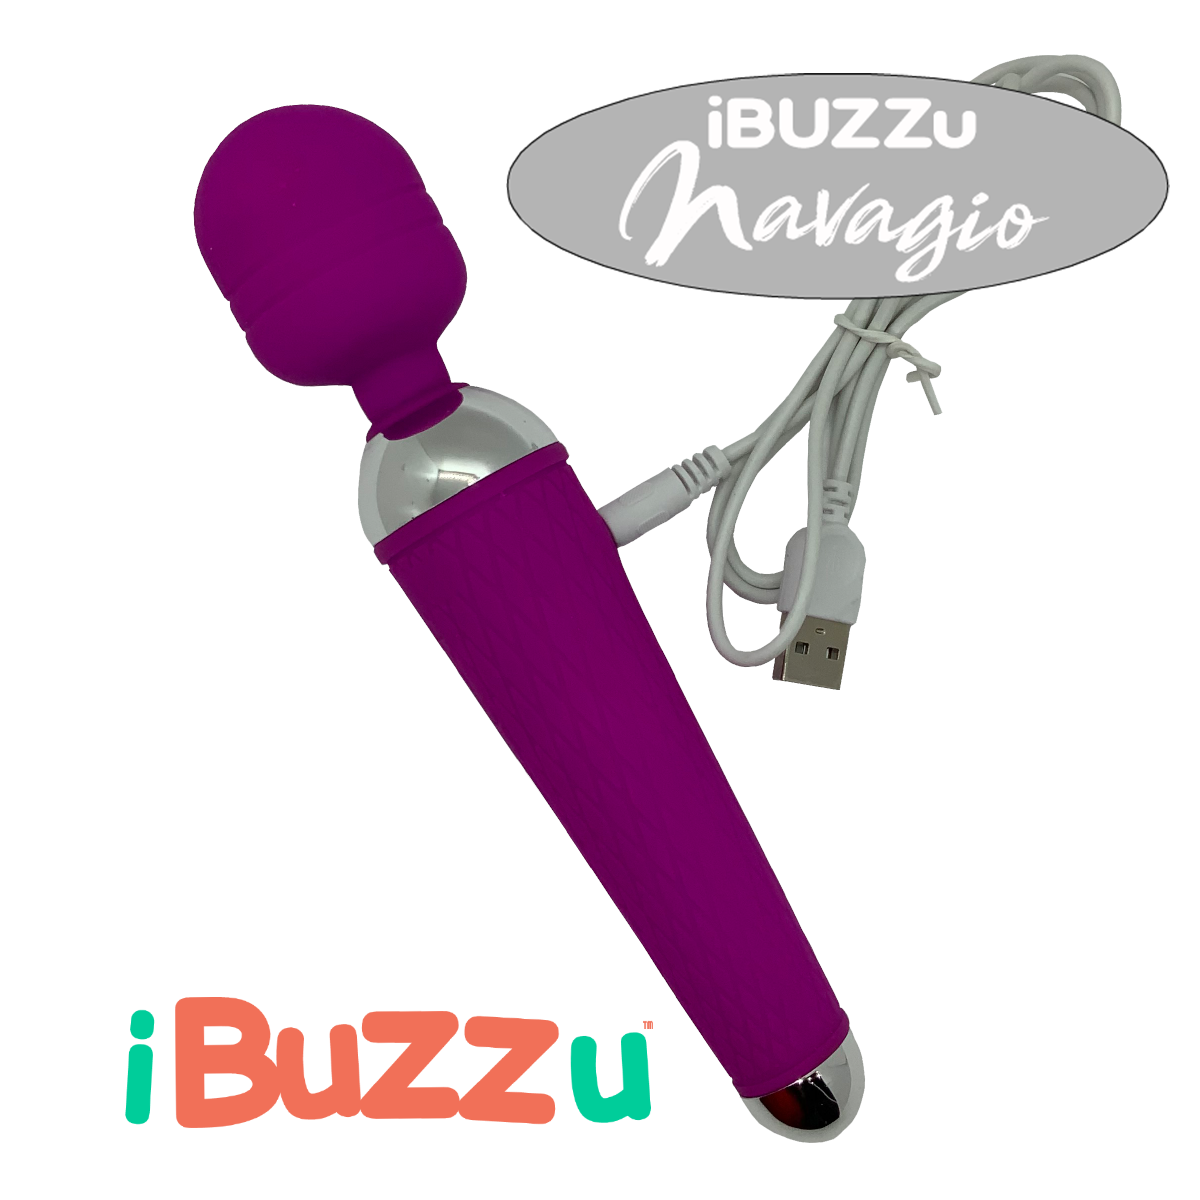 iBUZZu "NAVAGIO" - PURPLE